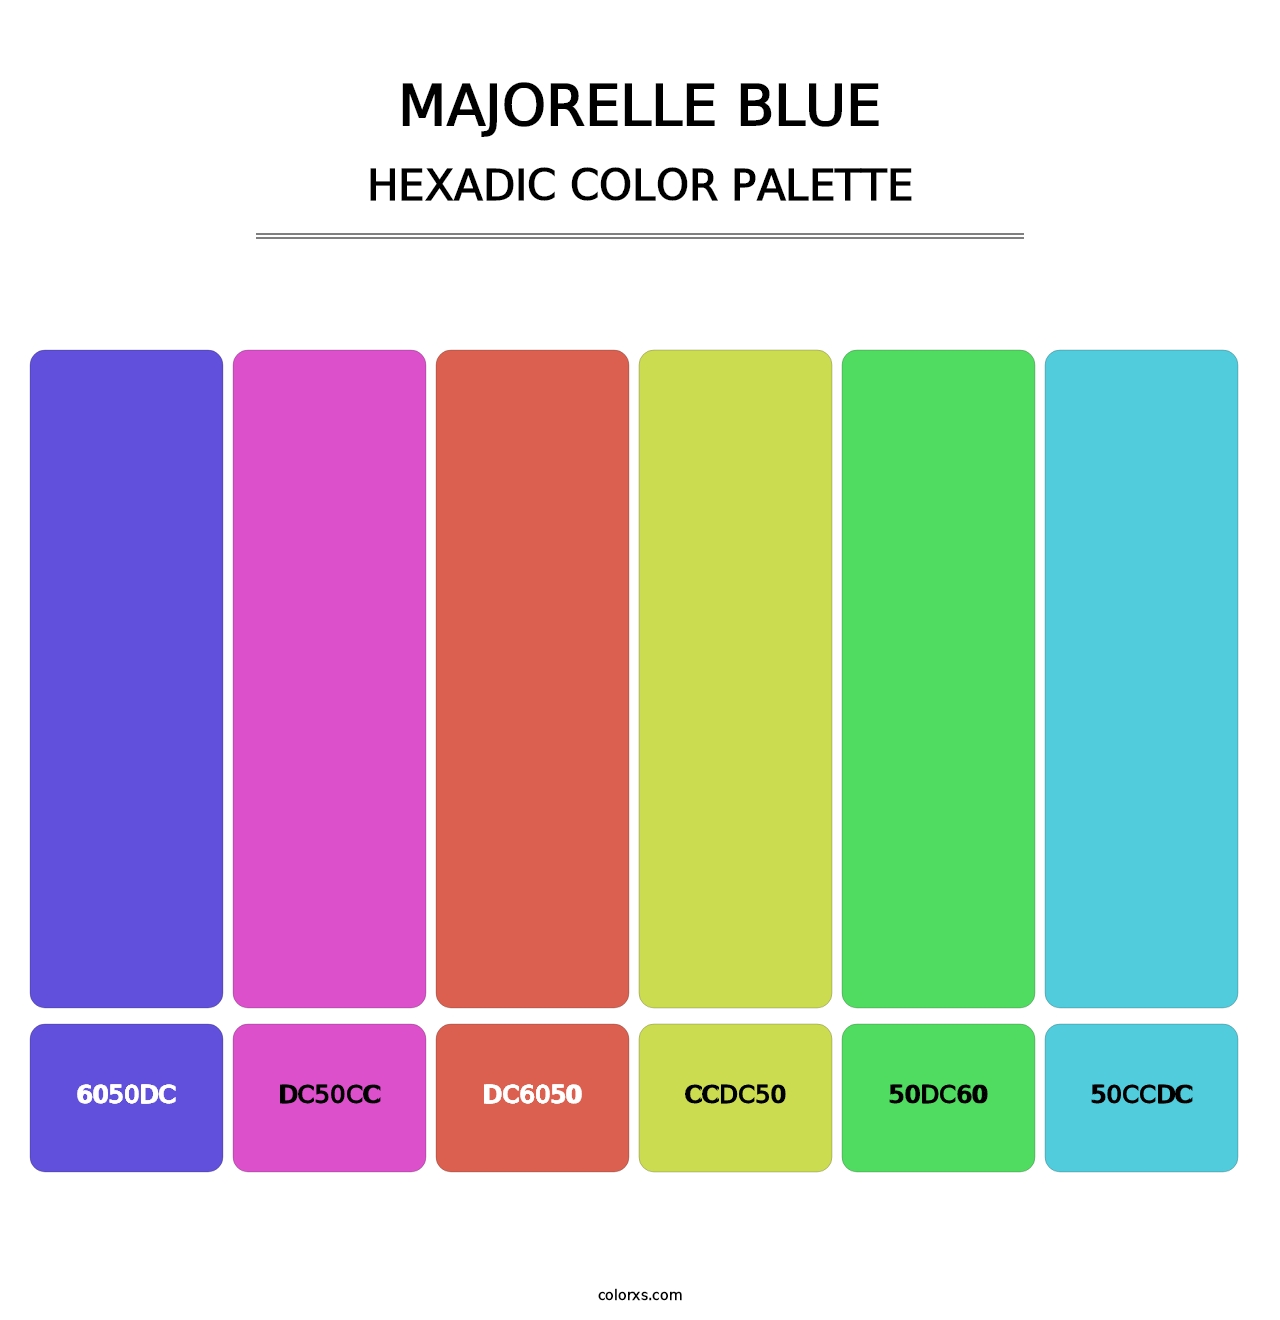 Majorelle Blue - Hexadic Color Palette